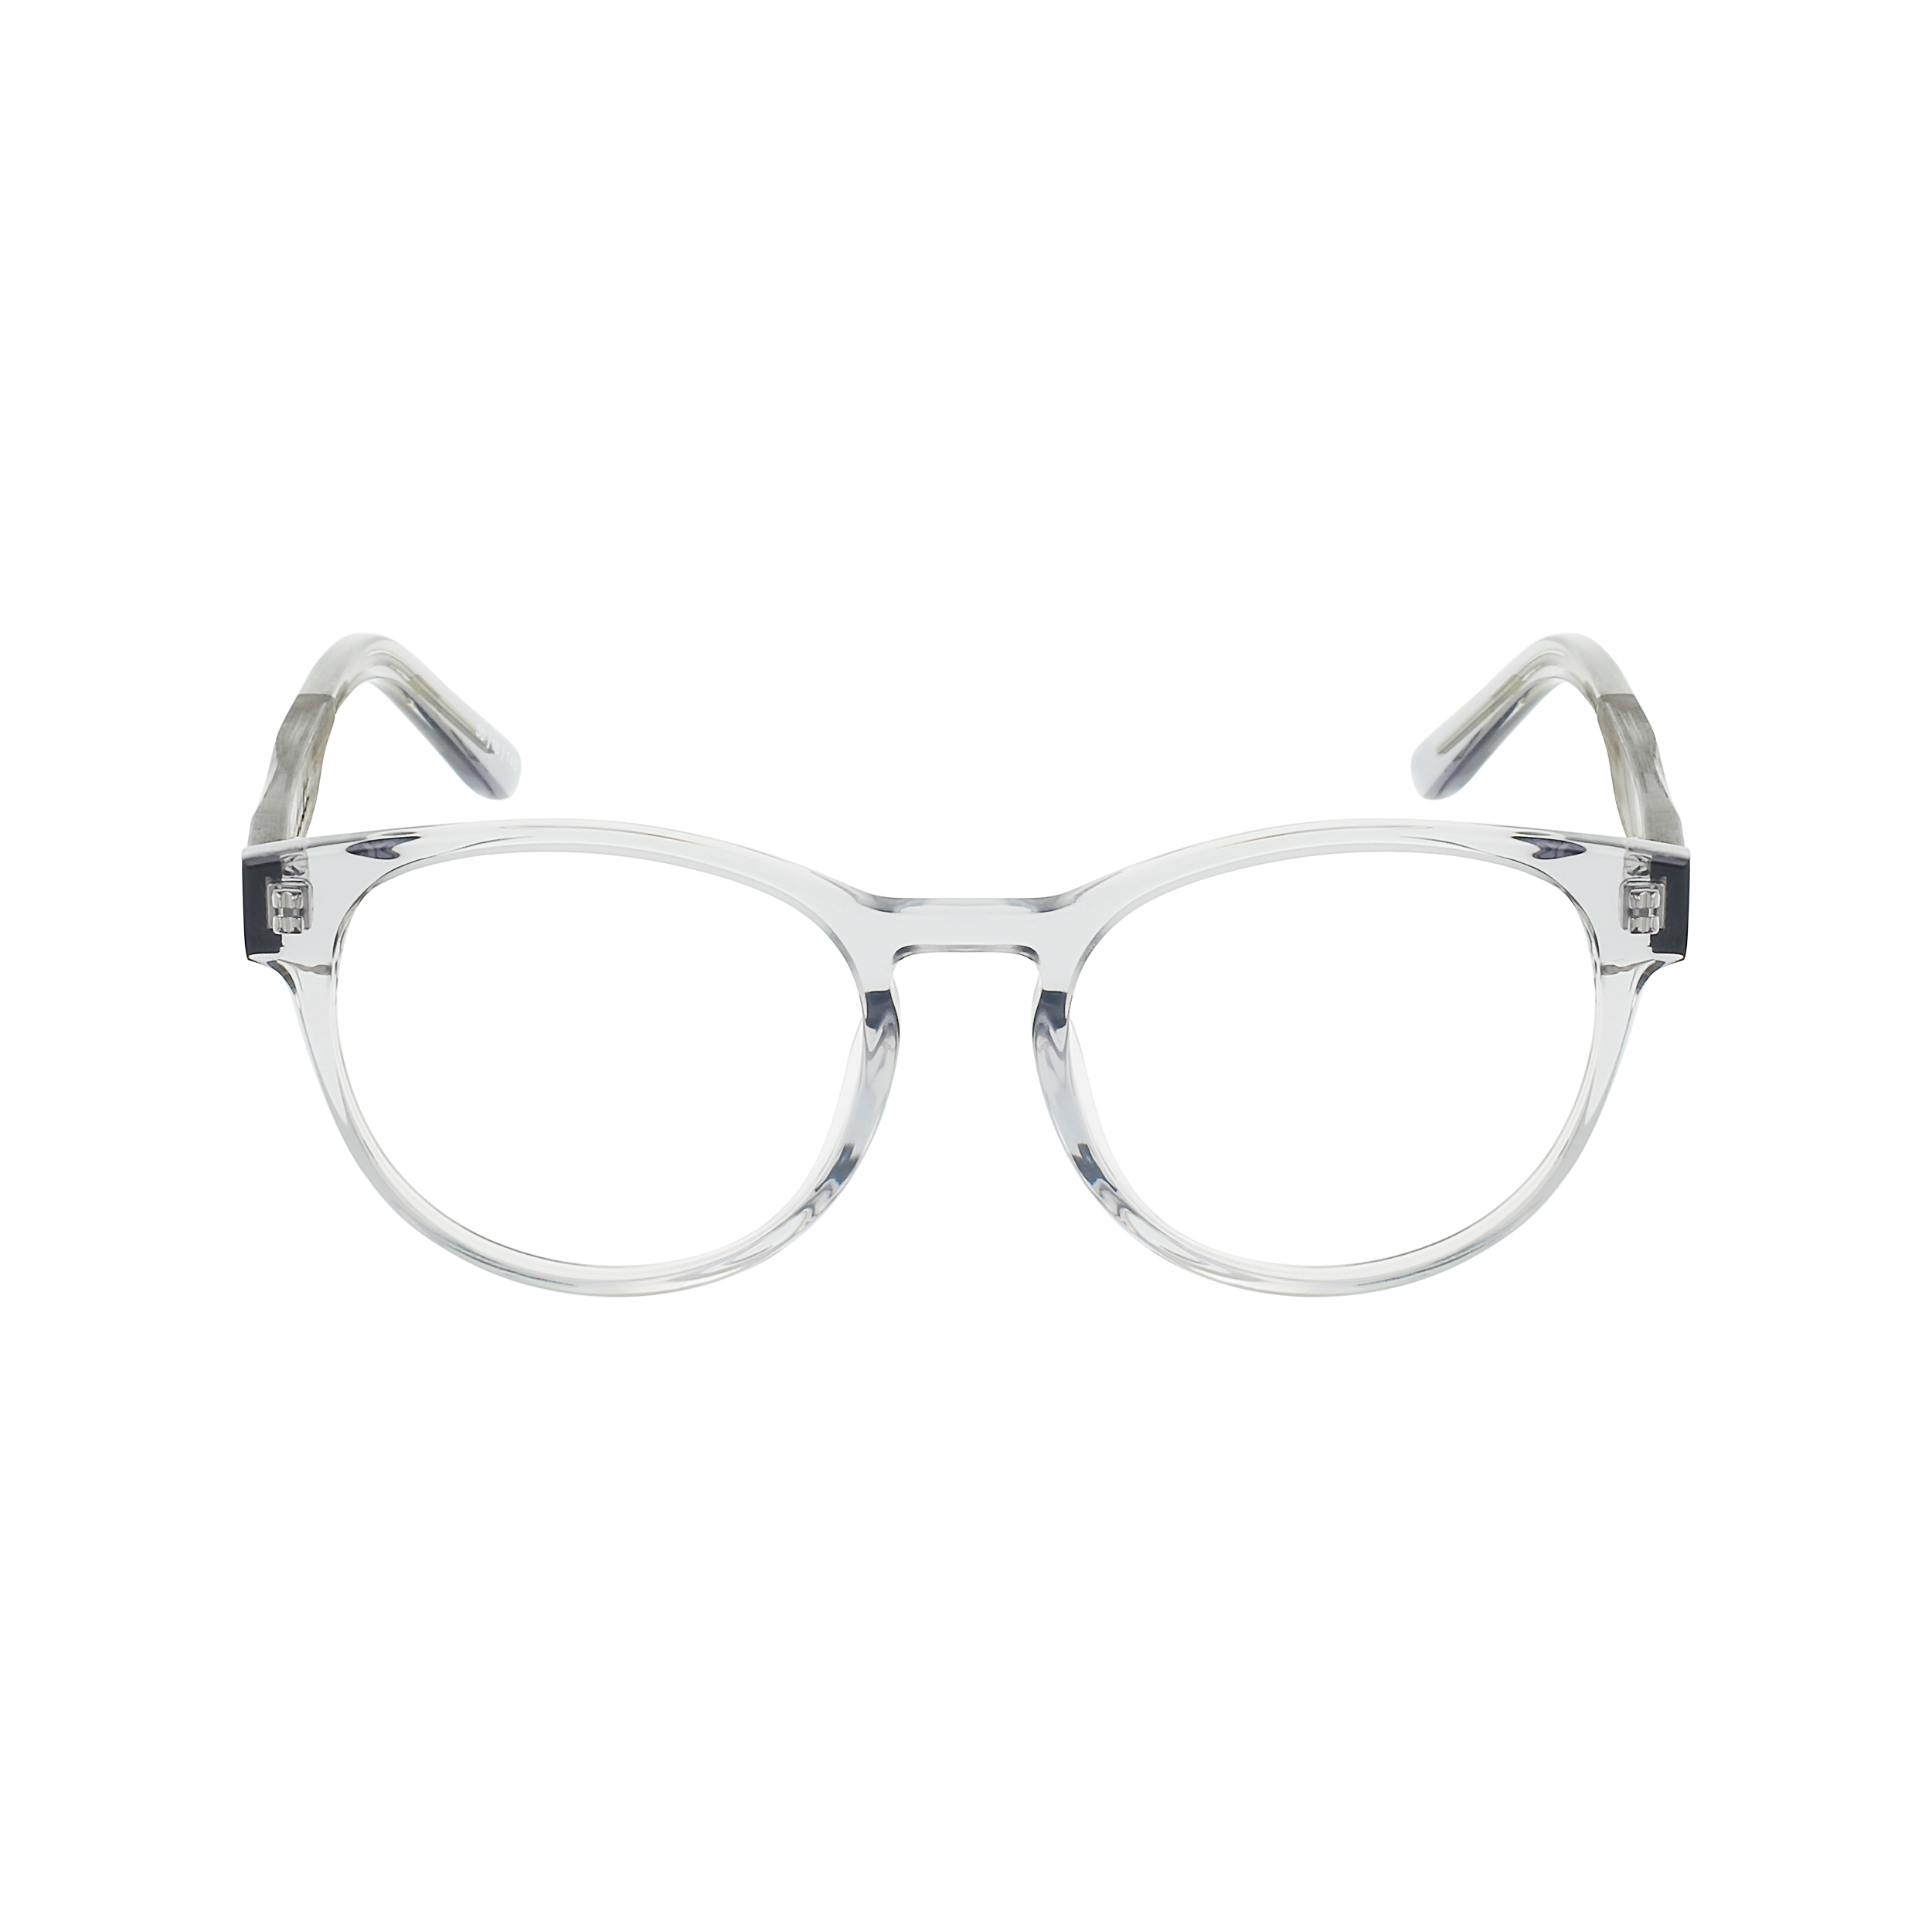 FLIGHT Eyeglasses Frame - Tinted Crystal- Johnny Fly | FLI-TCRY-RX-EBN | | 